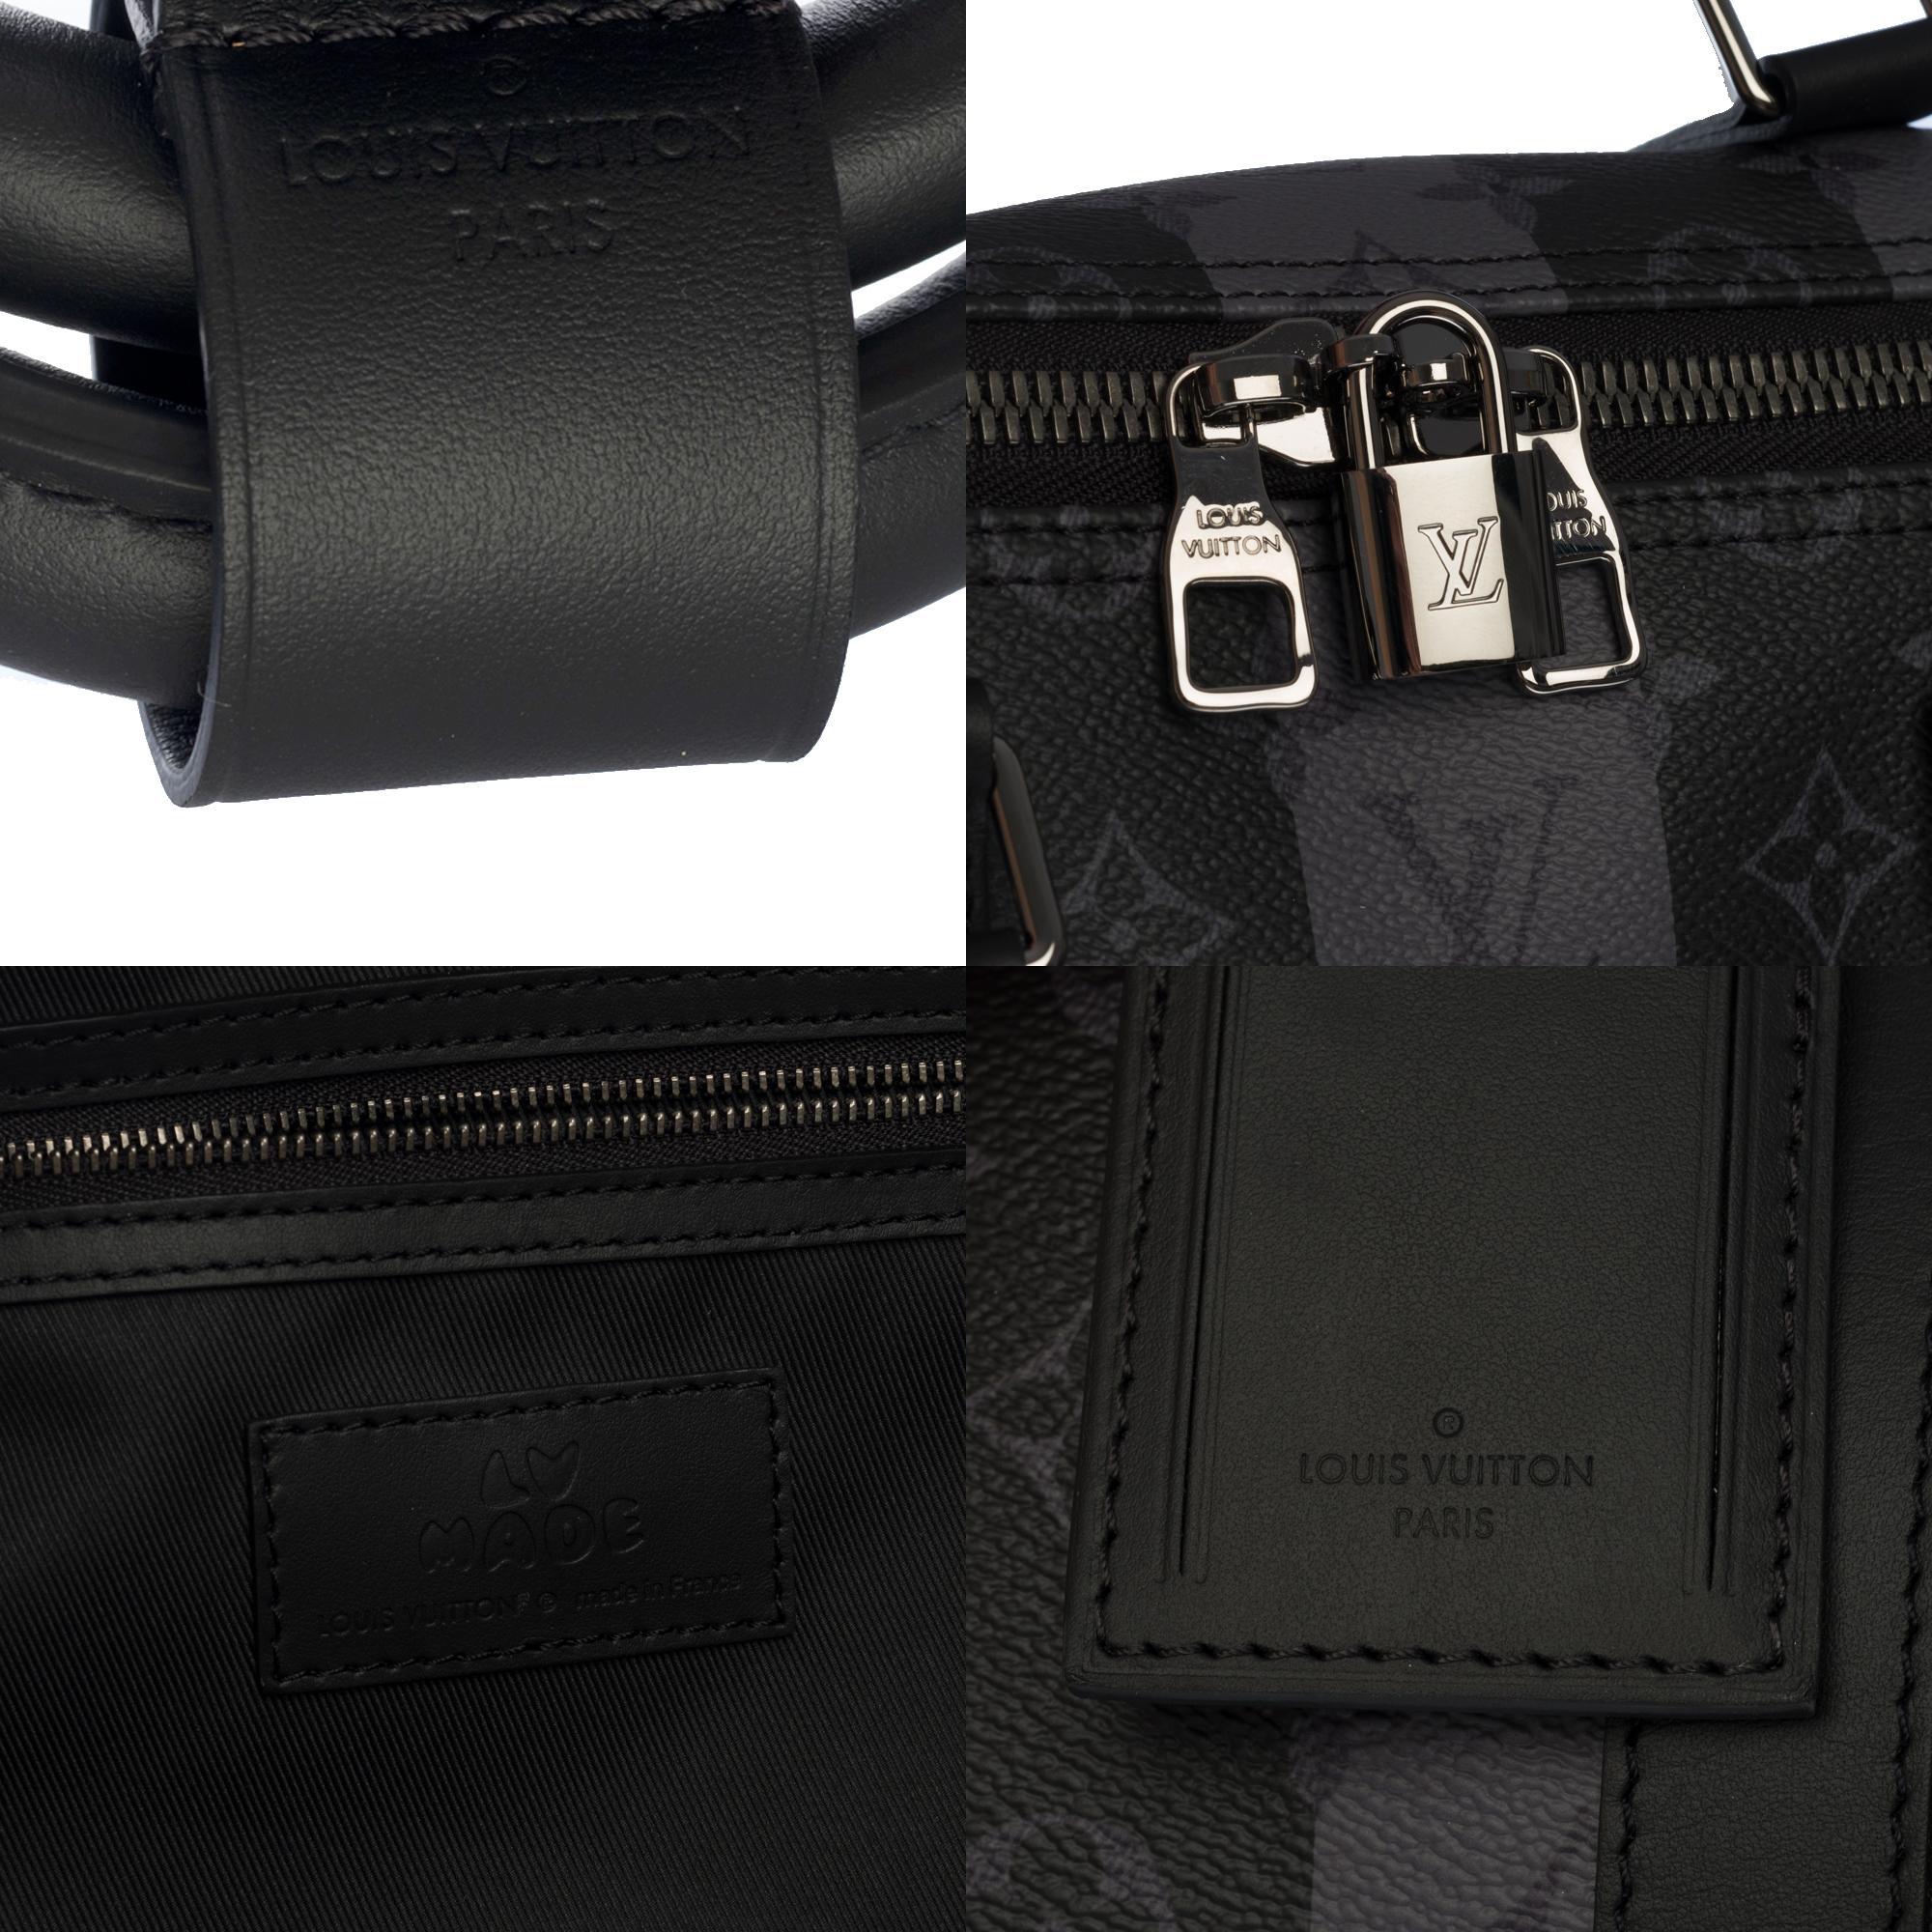 NEW-Louis Vuitton keepall 55 strap Travel bag in Stripes canvas by Abloh/Nigo 1